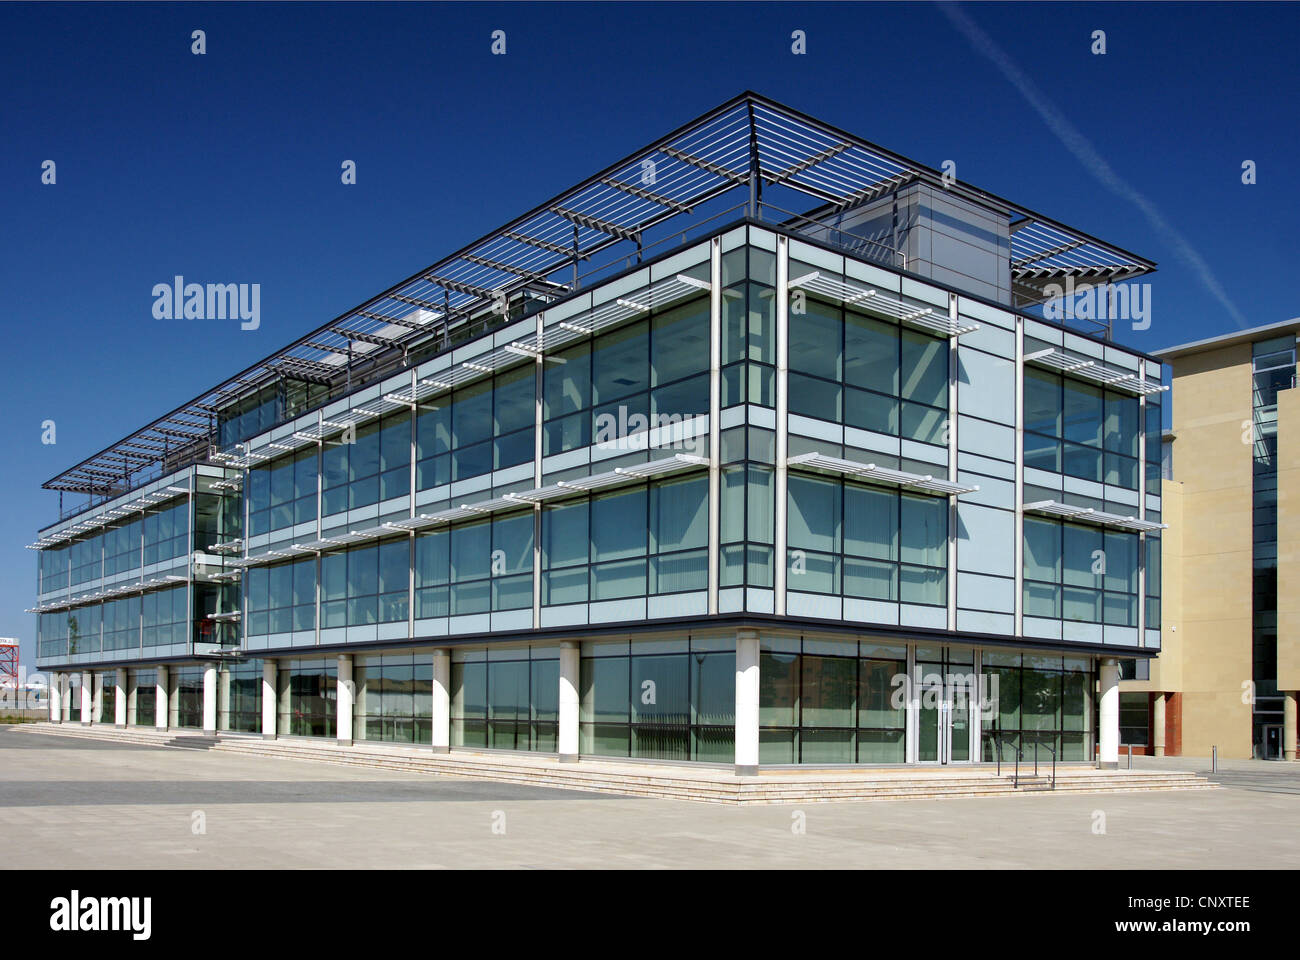 1 Humber Quays Wellington Street West Kingston Upon Hull Beschreibung: Bürogebäude, Glas- und Stahlkonstruktion Stockfoto